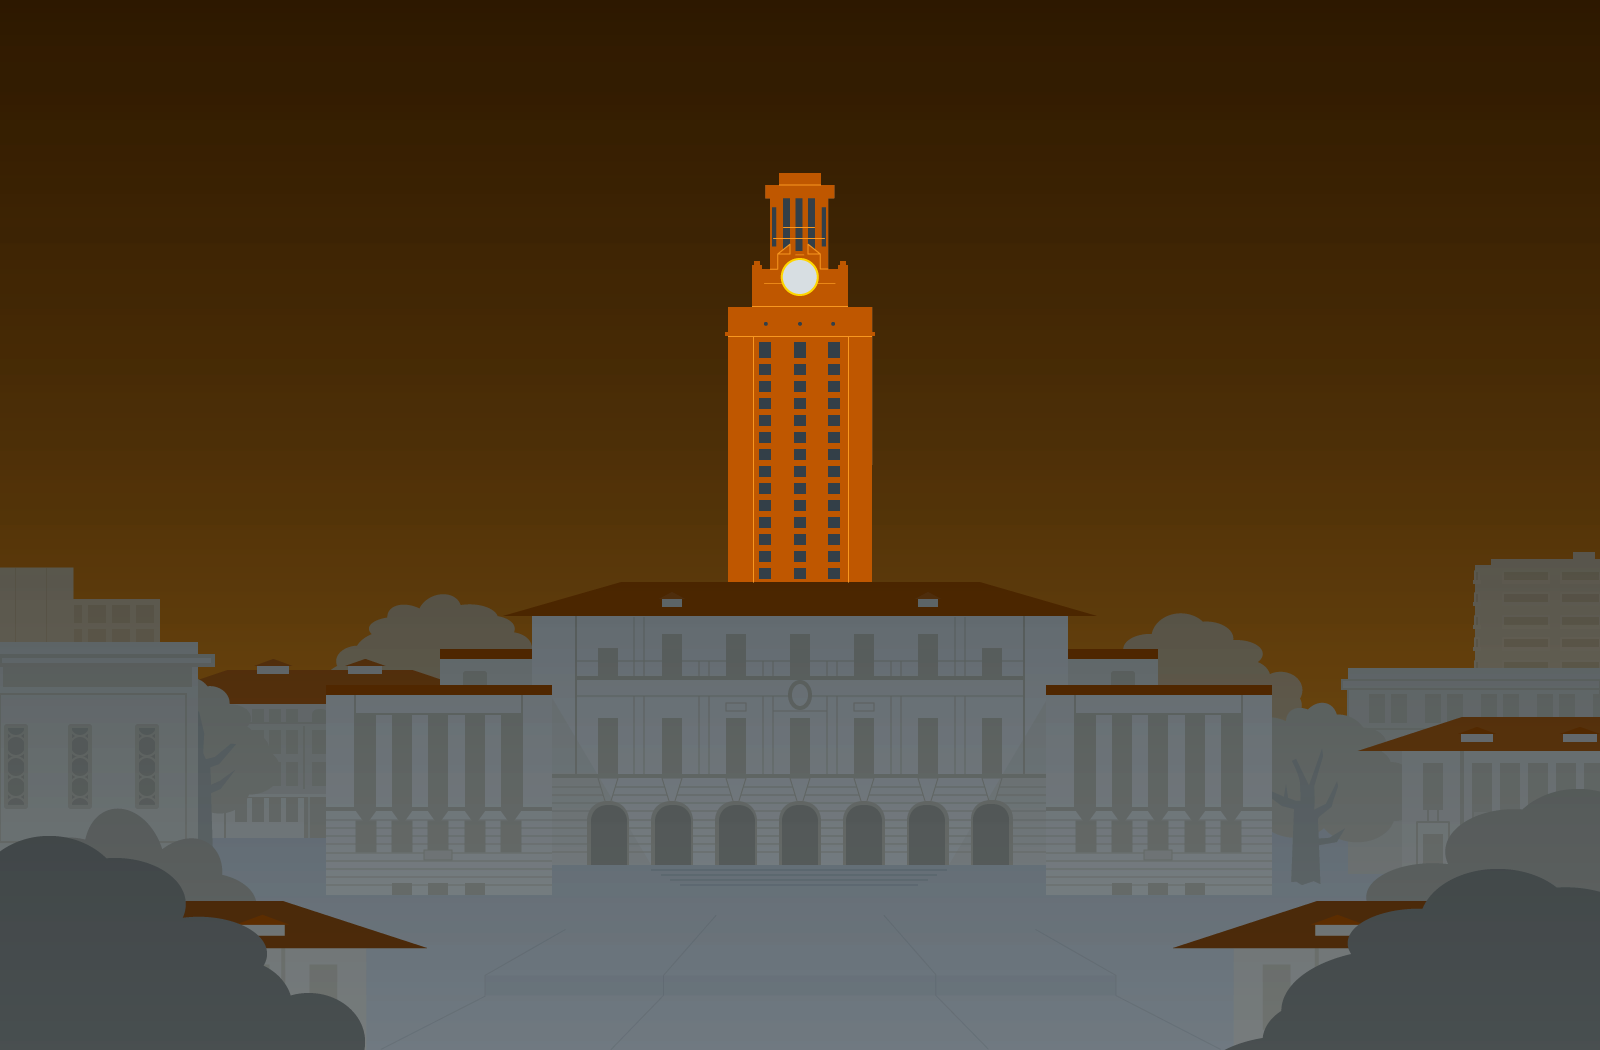 Tower illustration of Orange lighting configuration